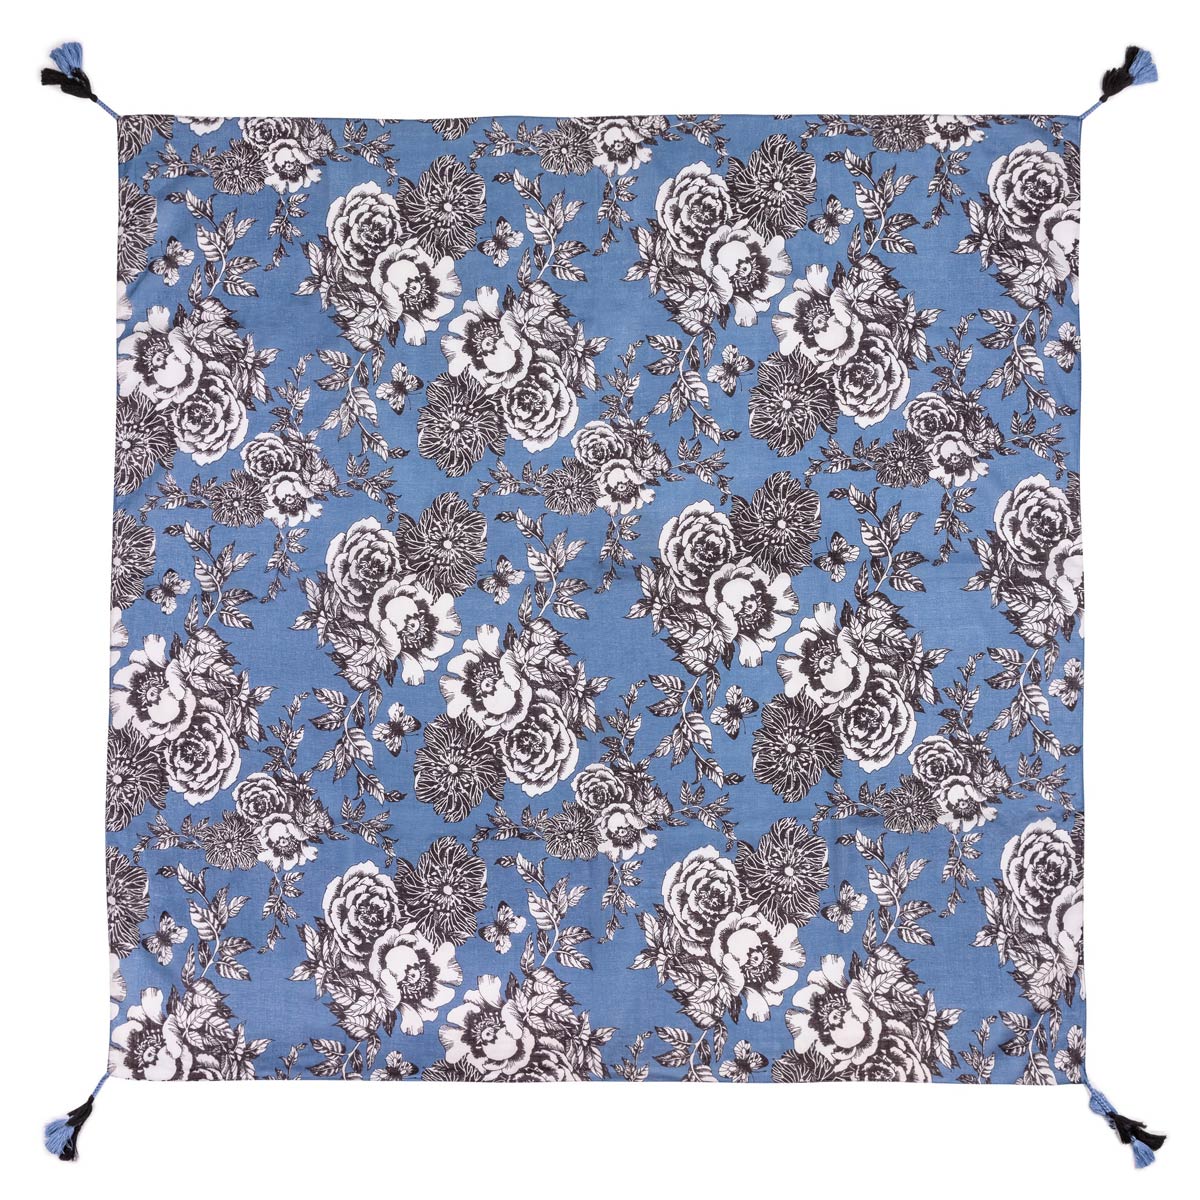 foulard-coton-femme-bleu--AT-06457